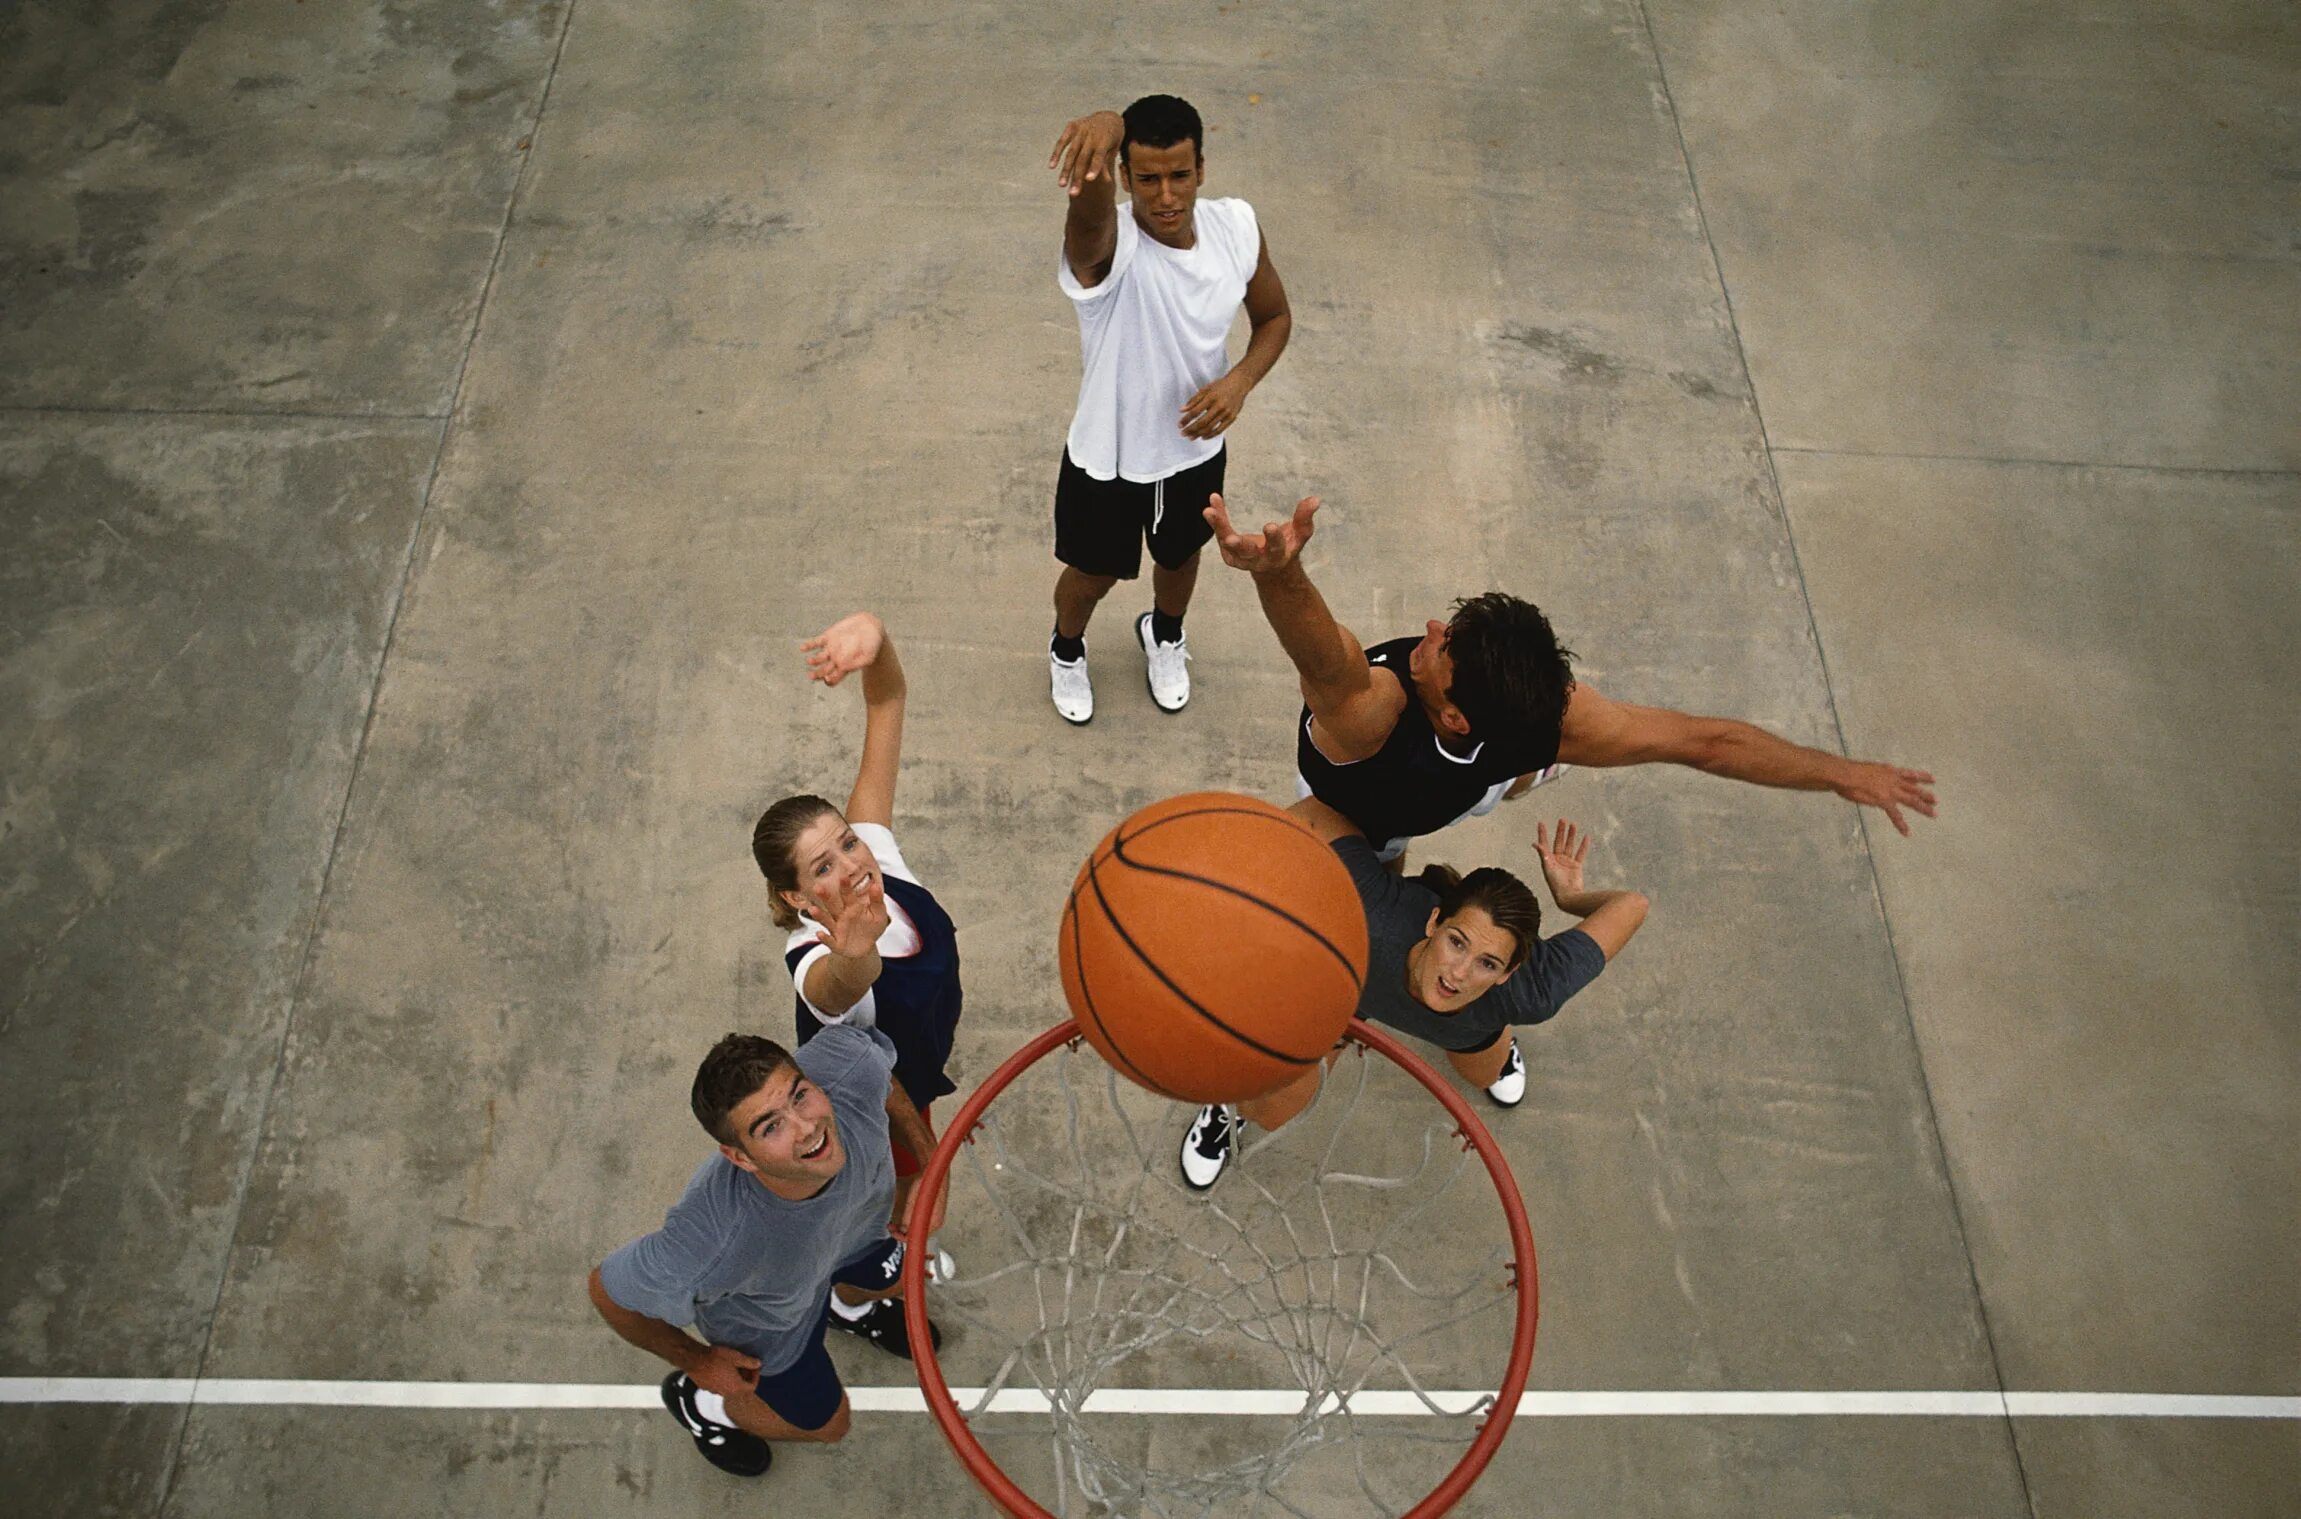 How to play sports. Баскетбол дети. Спортивные увлечения. Спортивные игры. Дети играющие в баскетбол.